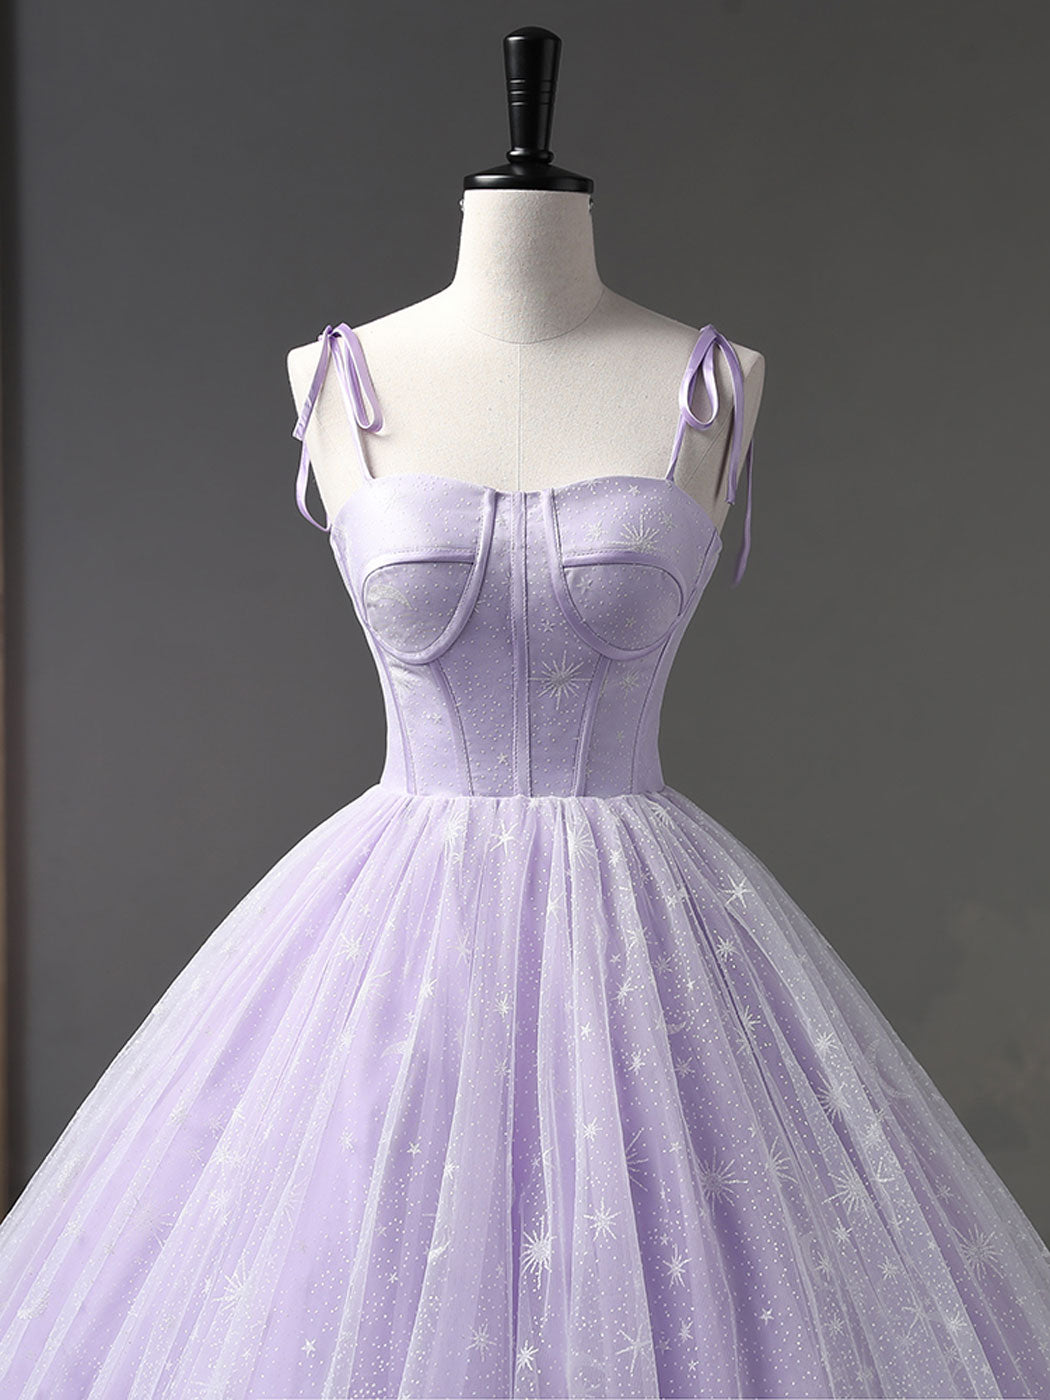 Purple dresses